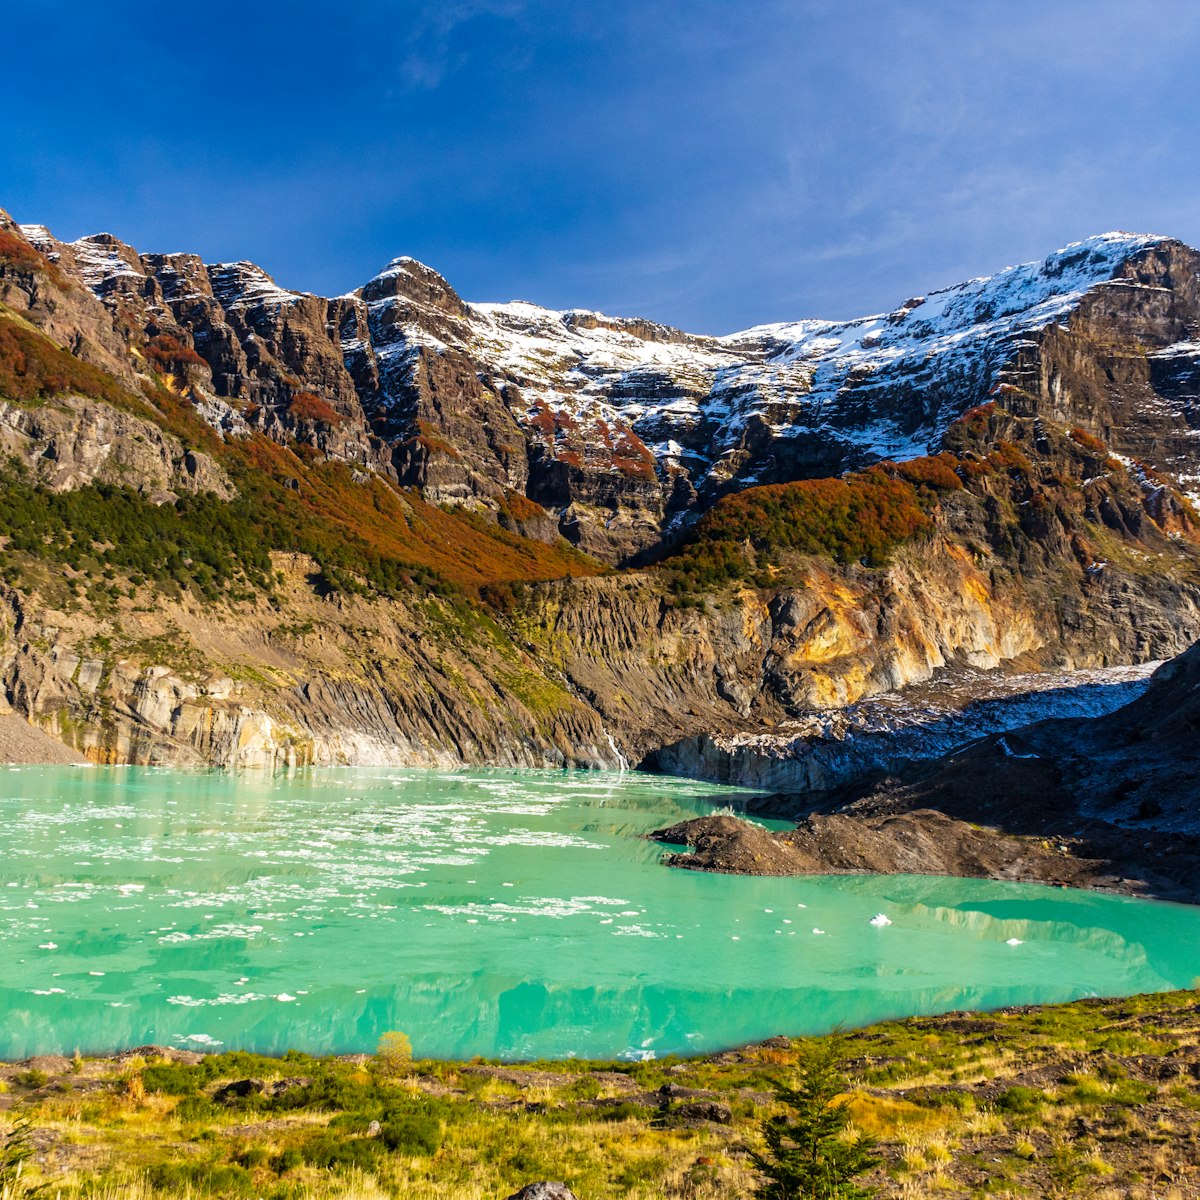 Ventisquero Negro glacial lake in Nahuel Huapi National Park in Argentina.